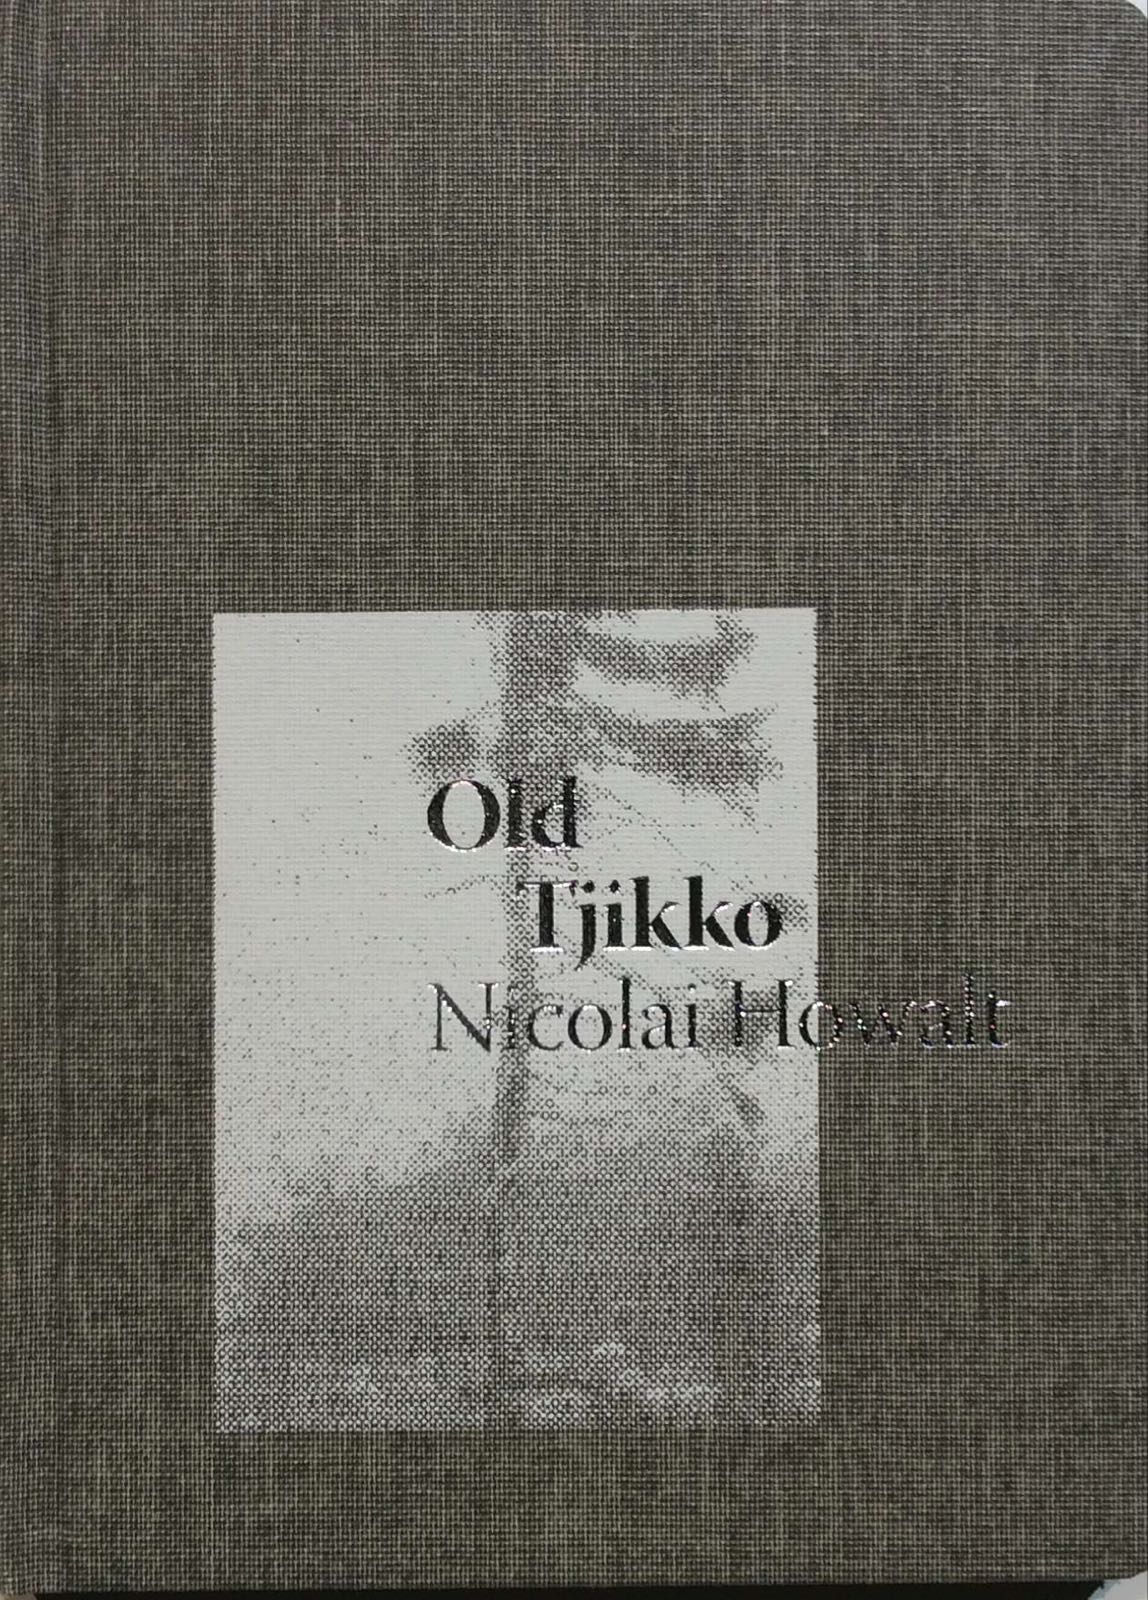 Howalt, Nicolai. Old Tjikko